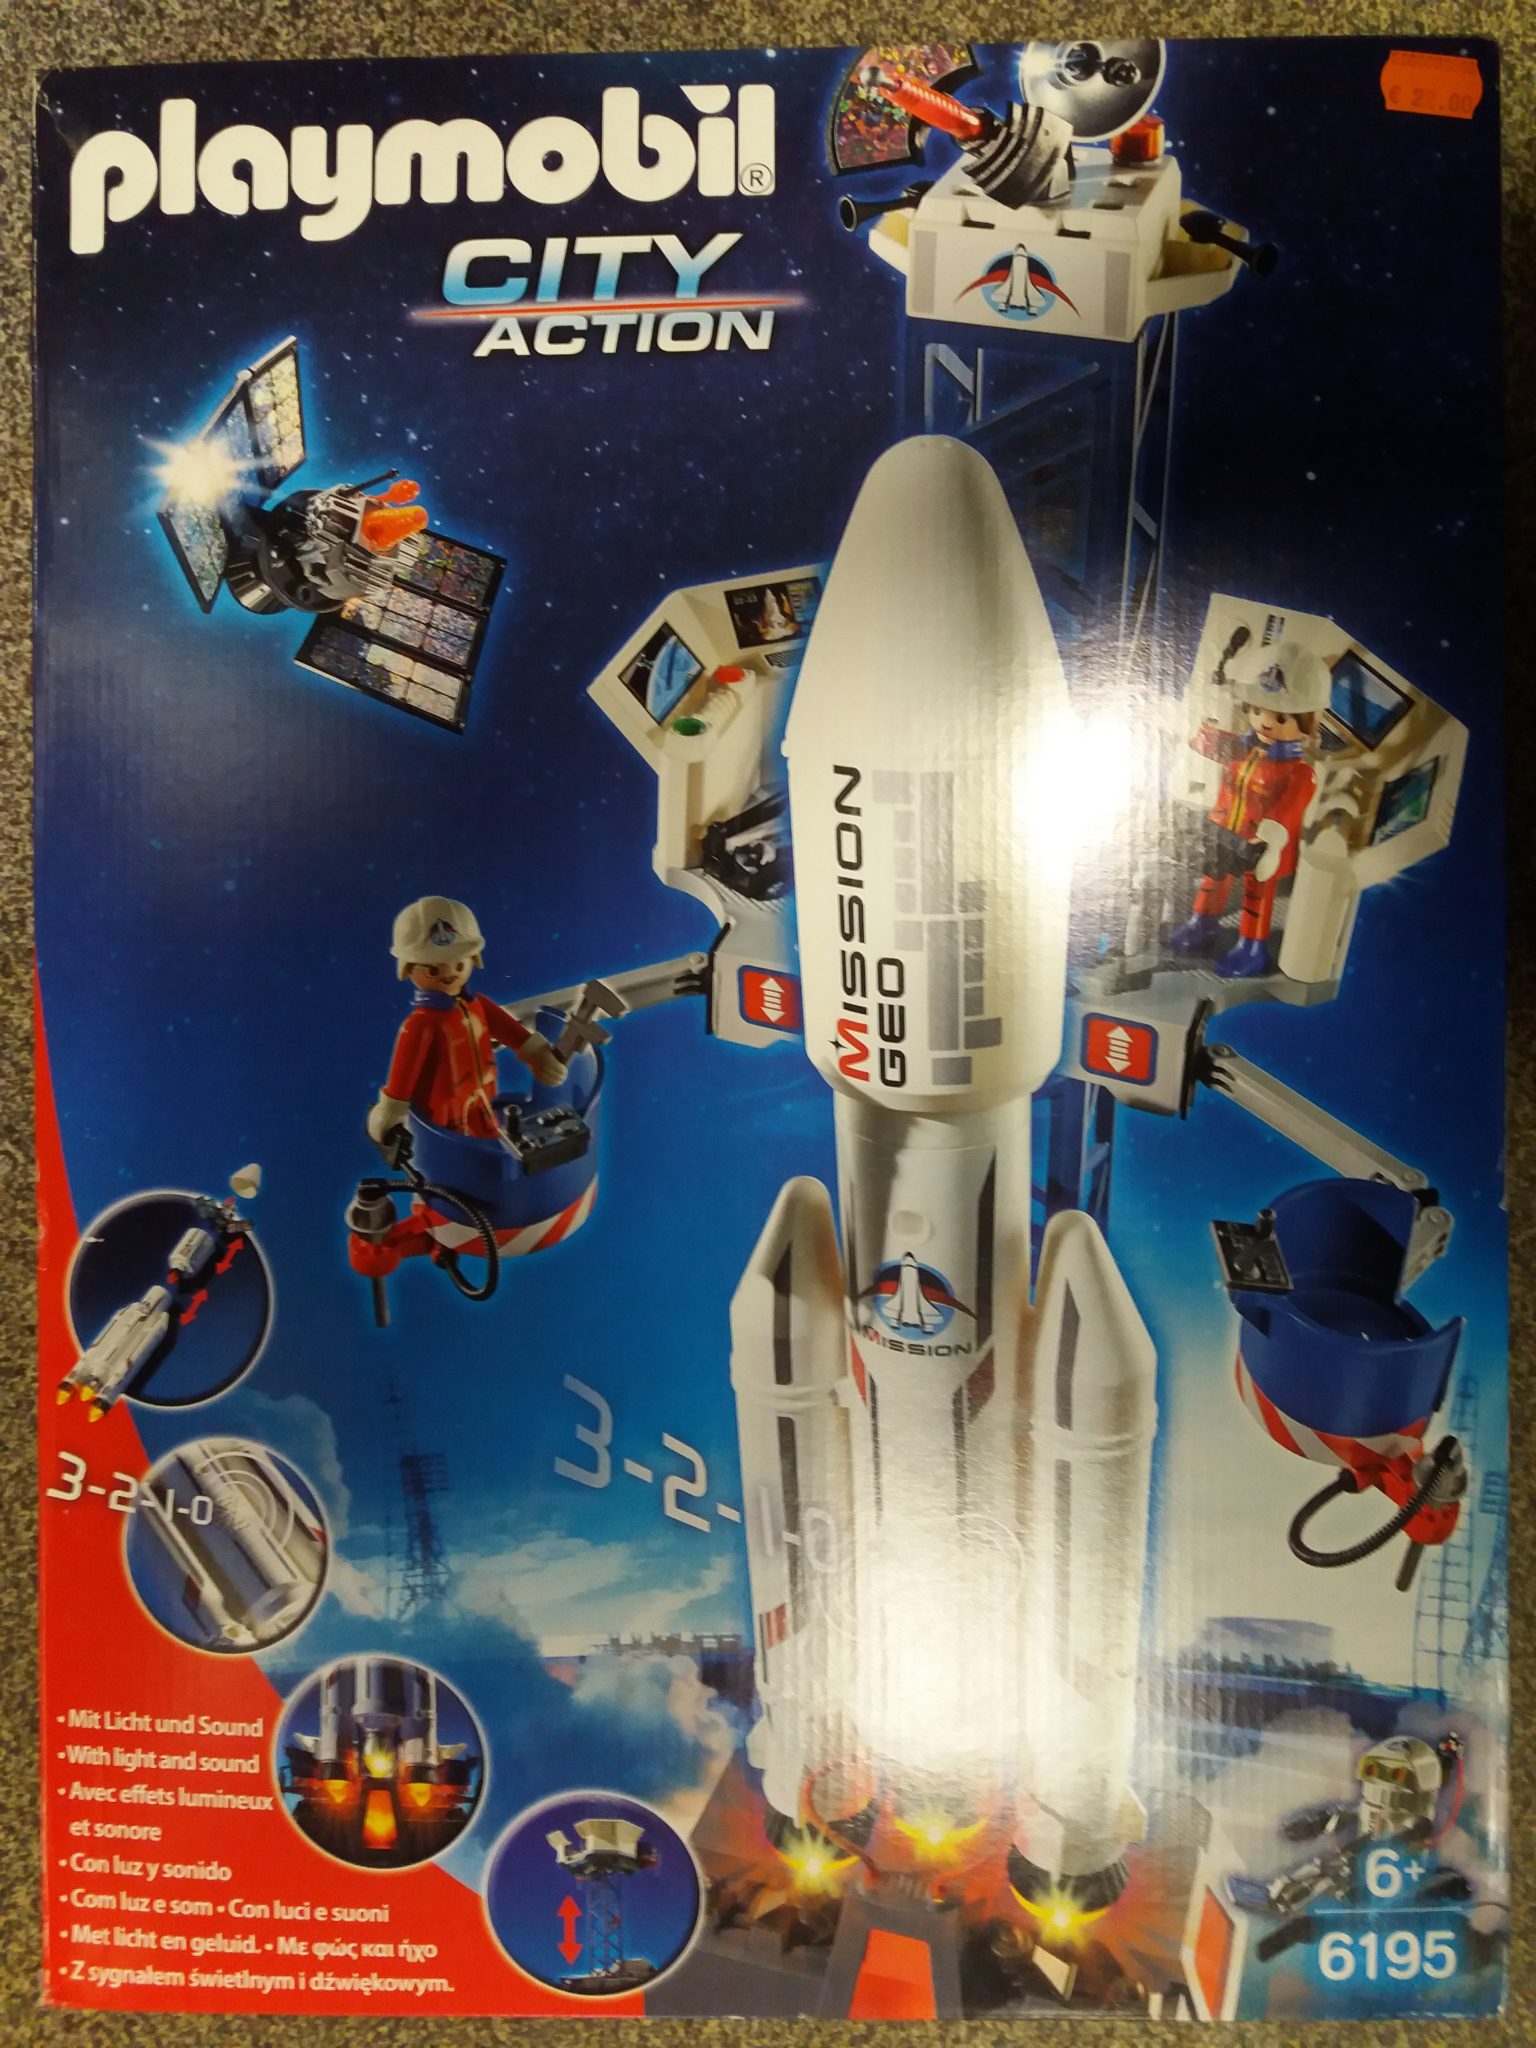 playmobil 6195 space rocket